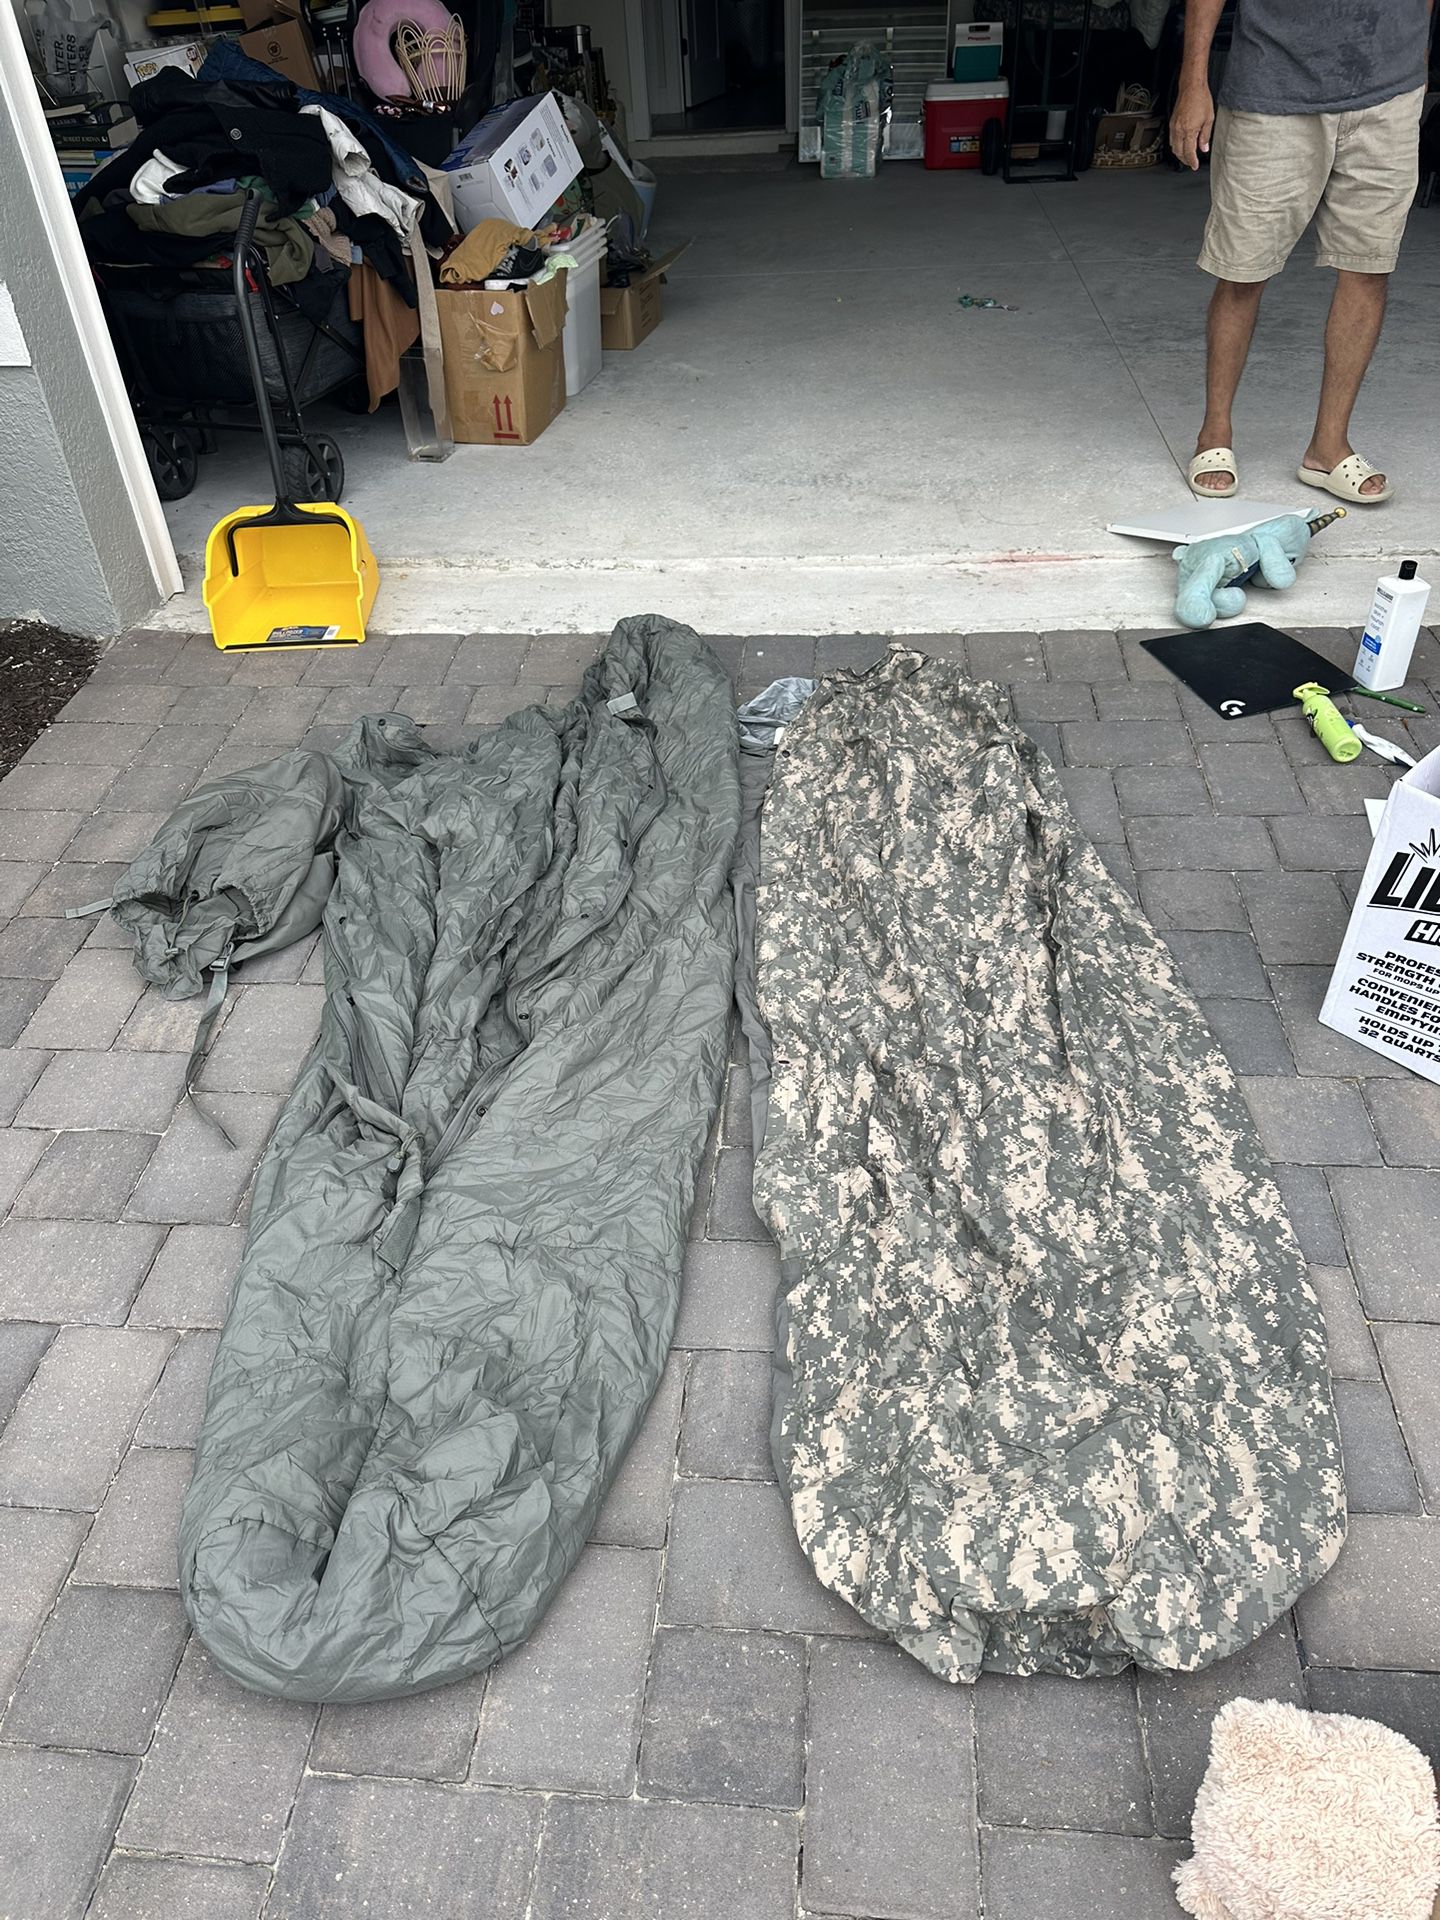 Military ACU Camo Sleeping Bag